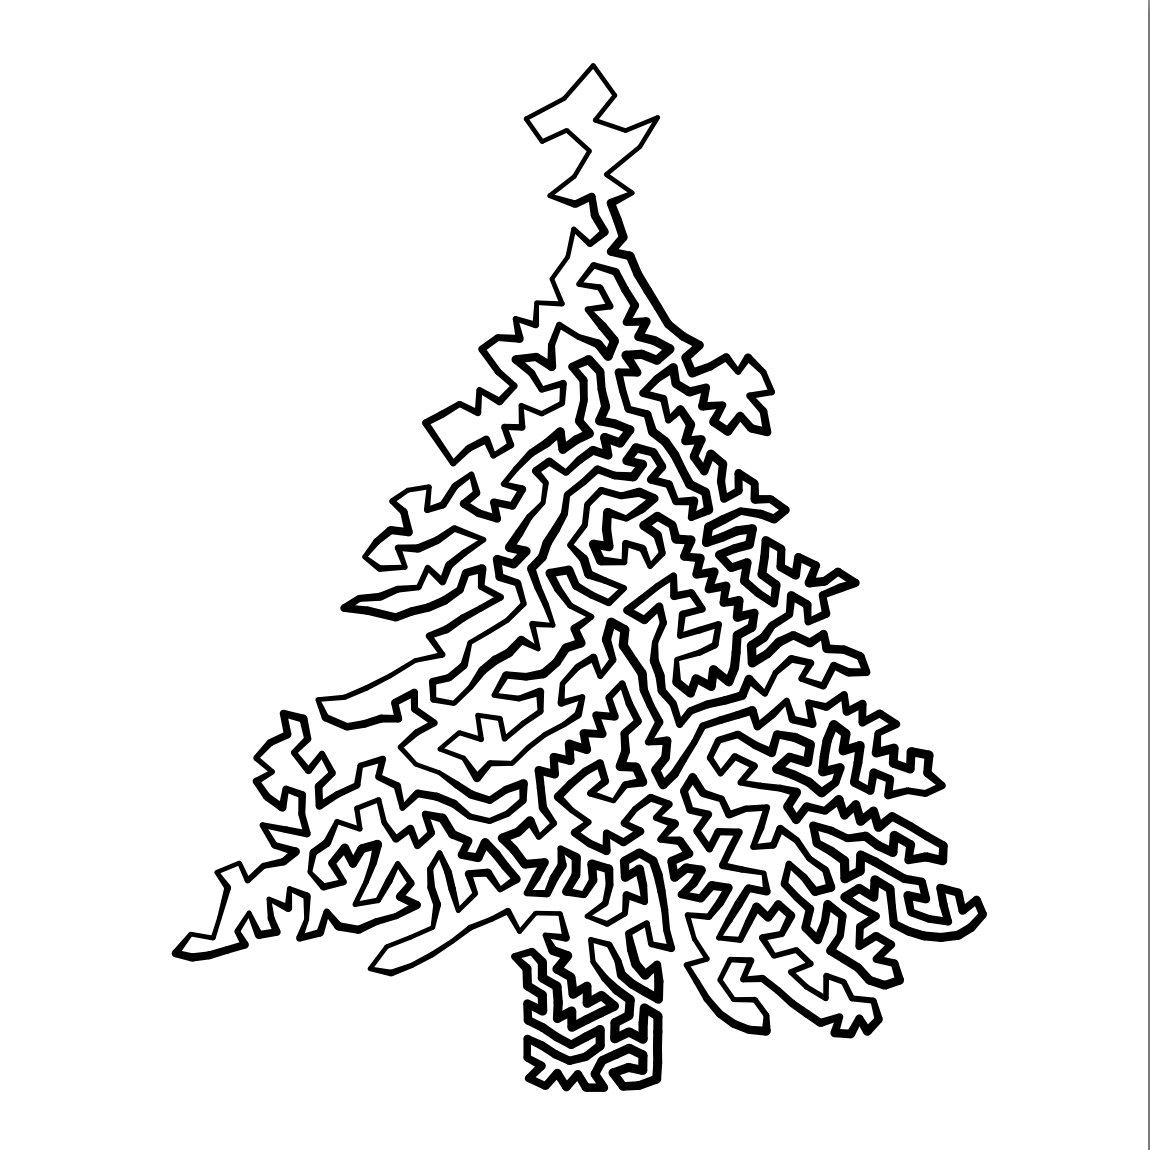 Robert Bob Bosch On Twitter Emoji Christmas Tree Tsp Art Rb 2018 Optimal Tour Of 1024 Cities Via Concorde Merry Christmas